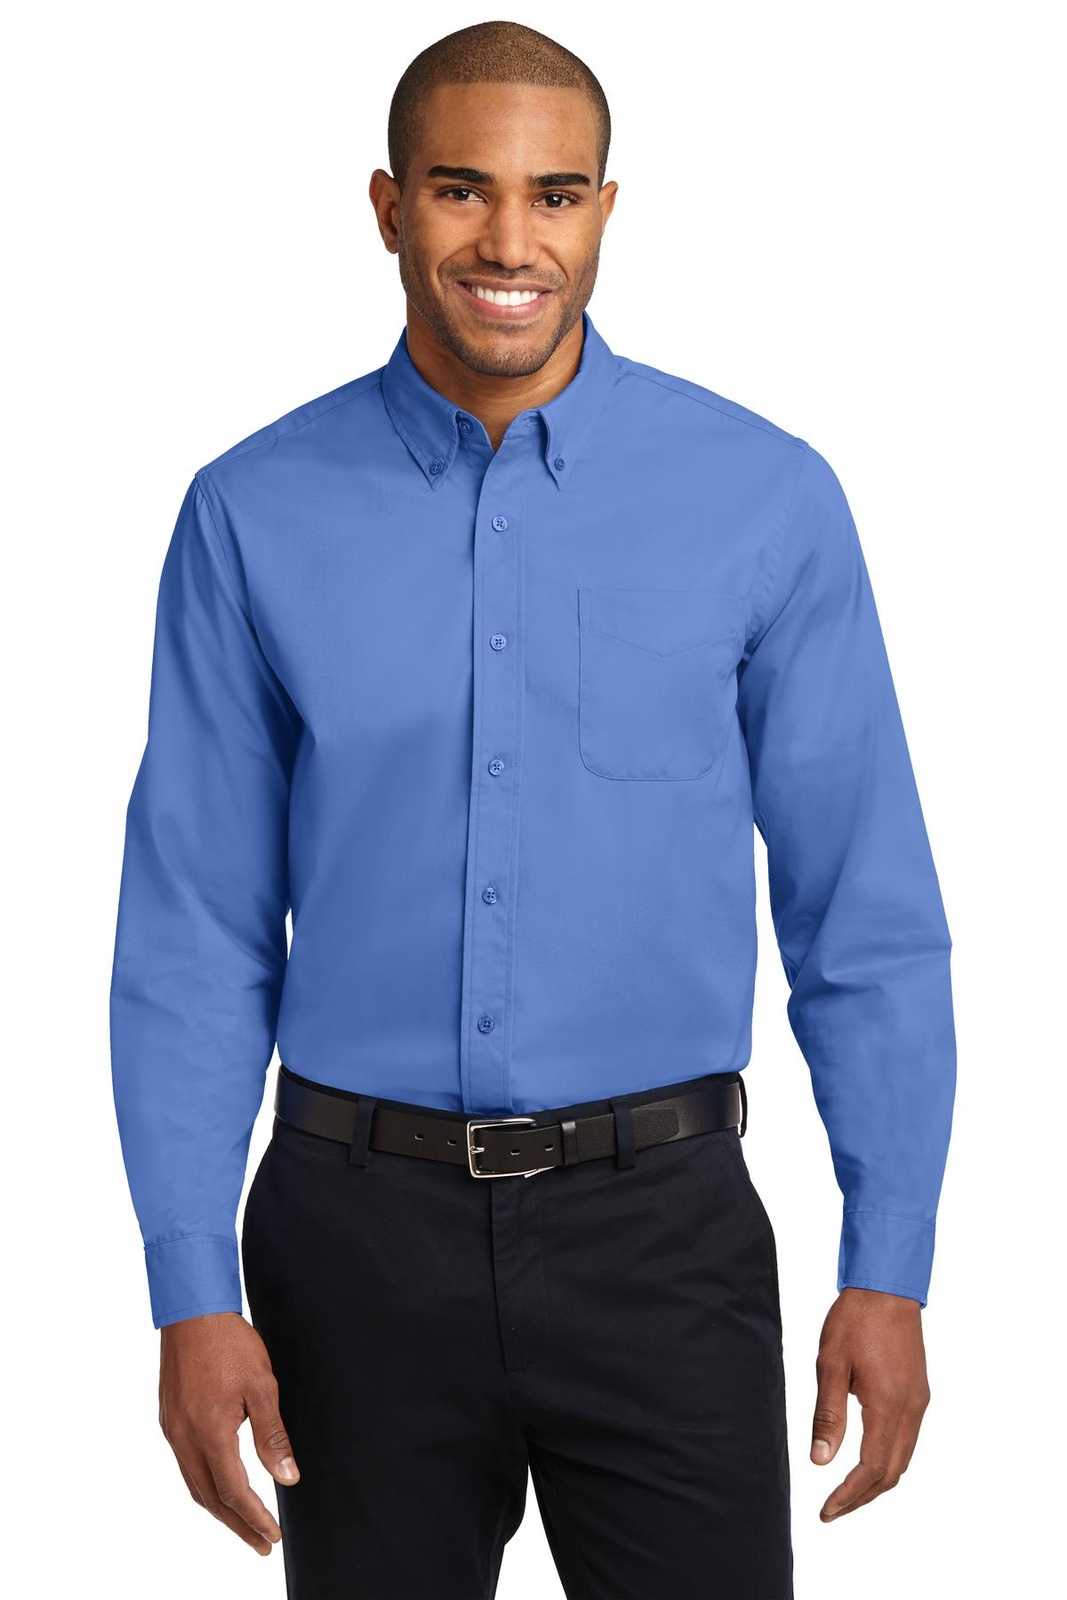 Port Authority TLS608 Tall Long Sleeve Easy Care Shirt - Ultramarine Blue - HIT a Double - 1